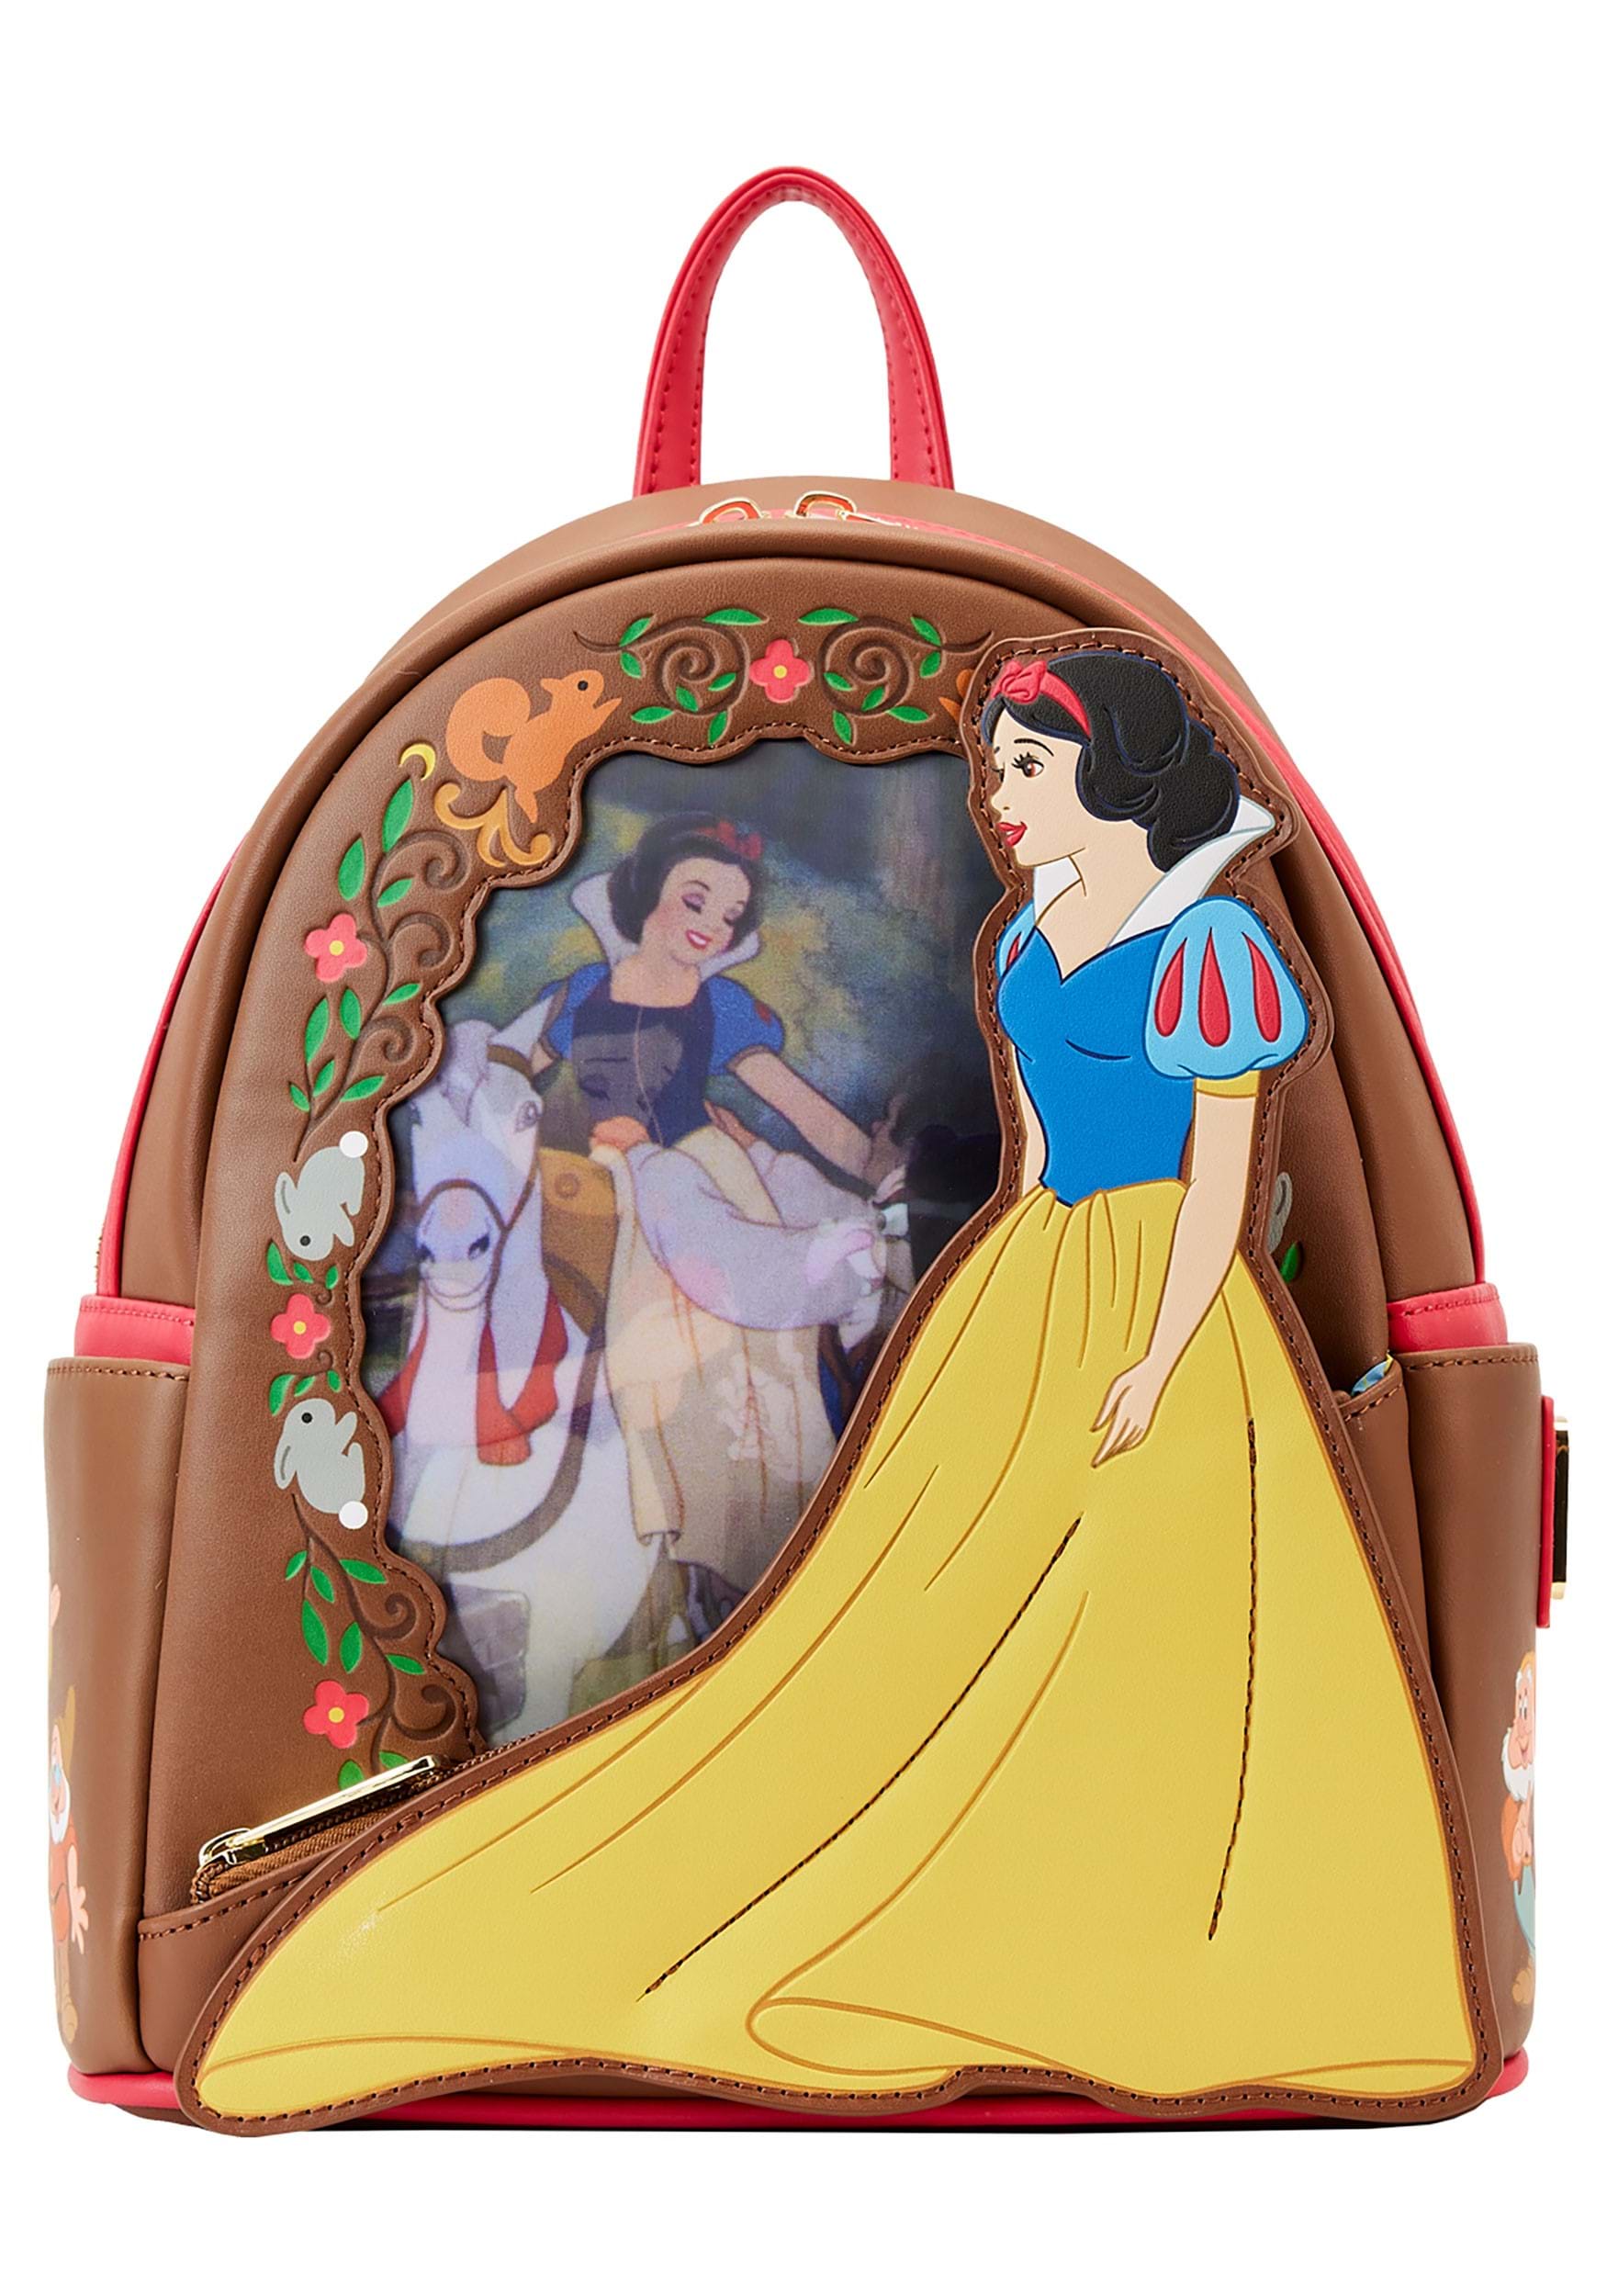 Buy Sleeping Beauty Princess Series Lenticular Zip Around Wristlet Wallet  at Loungefly.